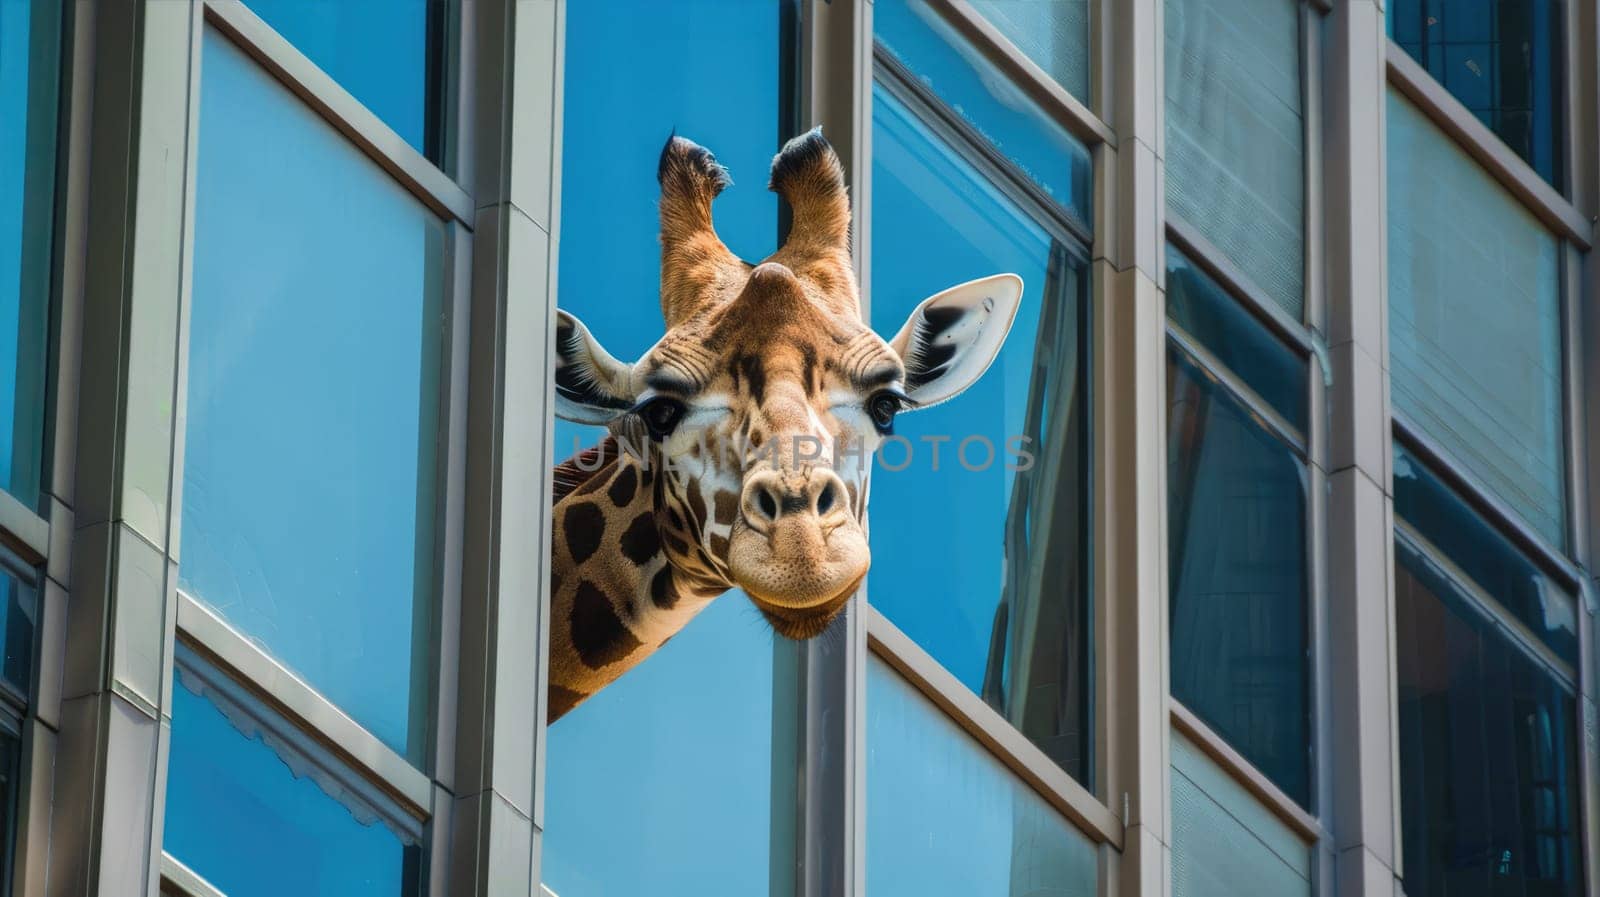 Giraffe in the city. A giraffe near the window of an office building. by natali_brill